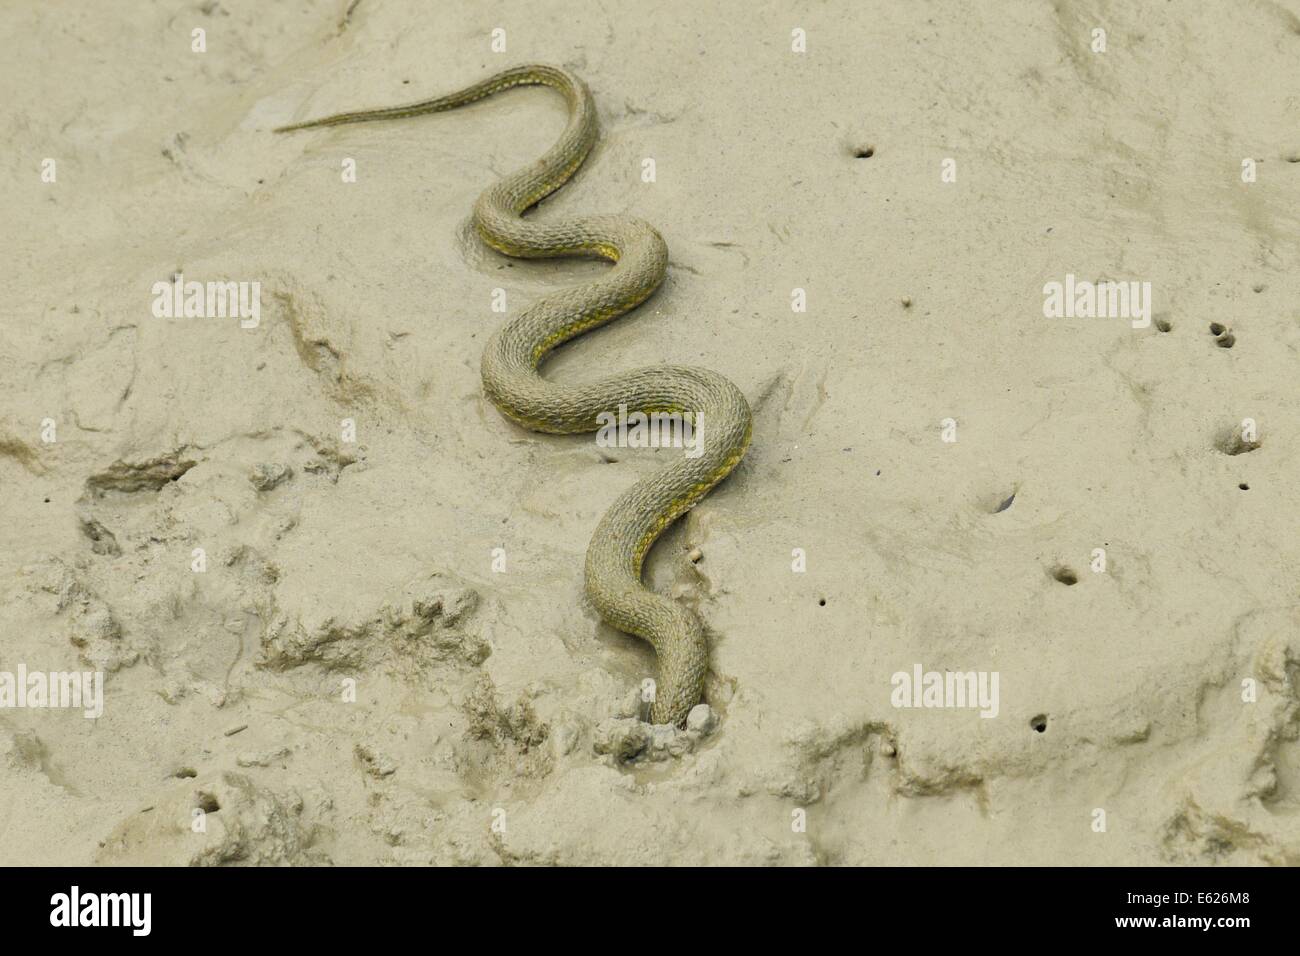 A Malaysian Sea Snake on Shore Stock Photo